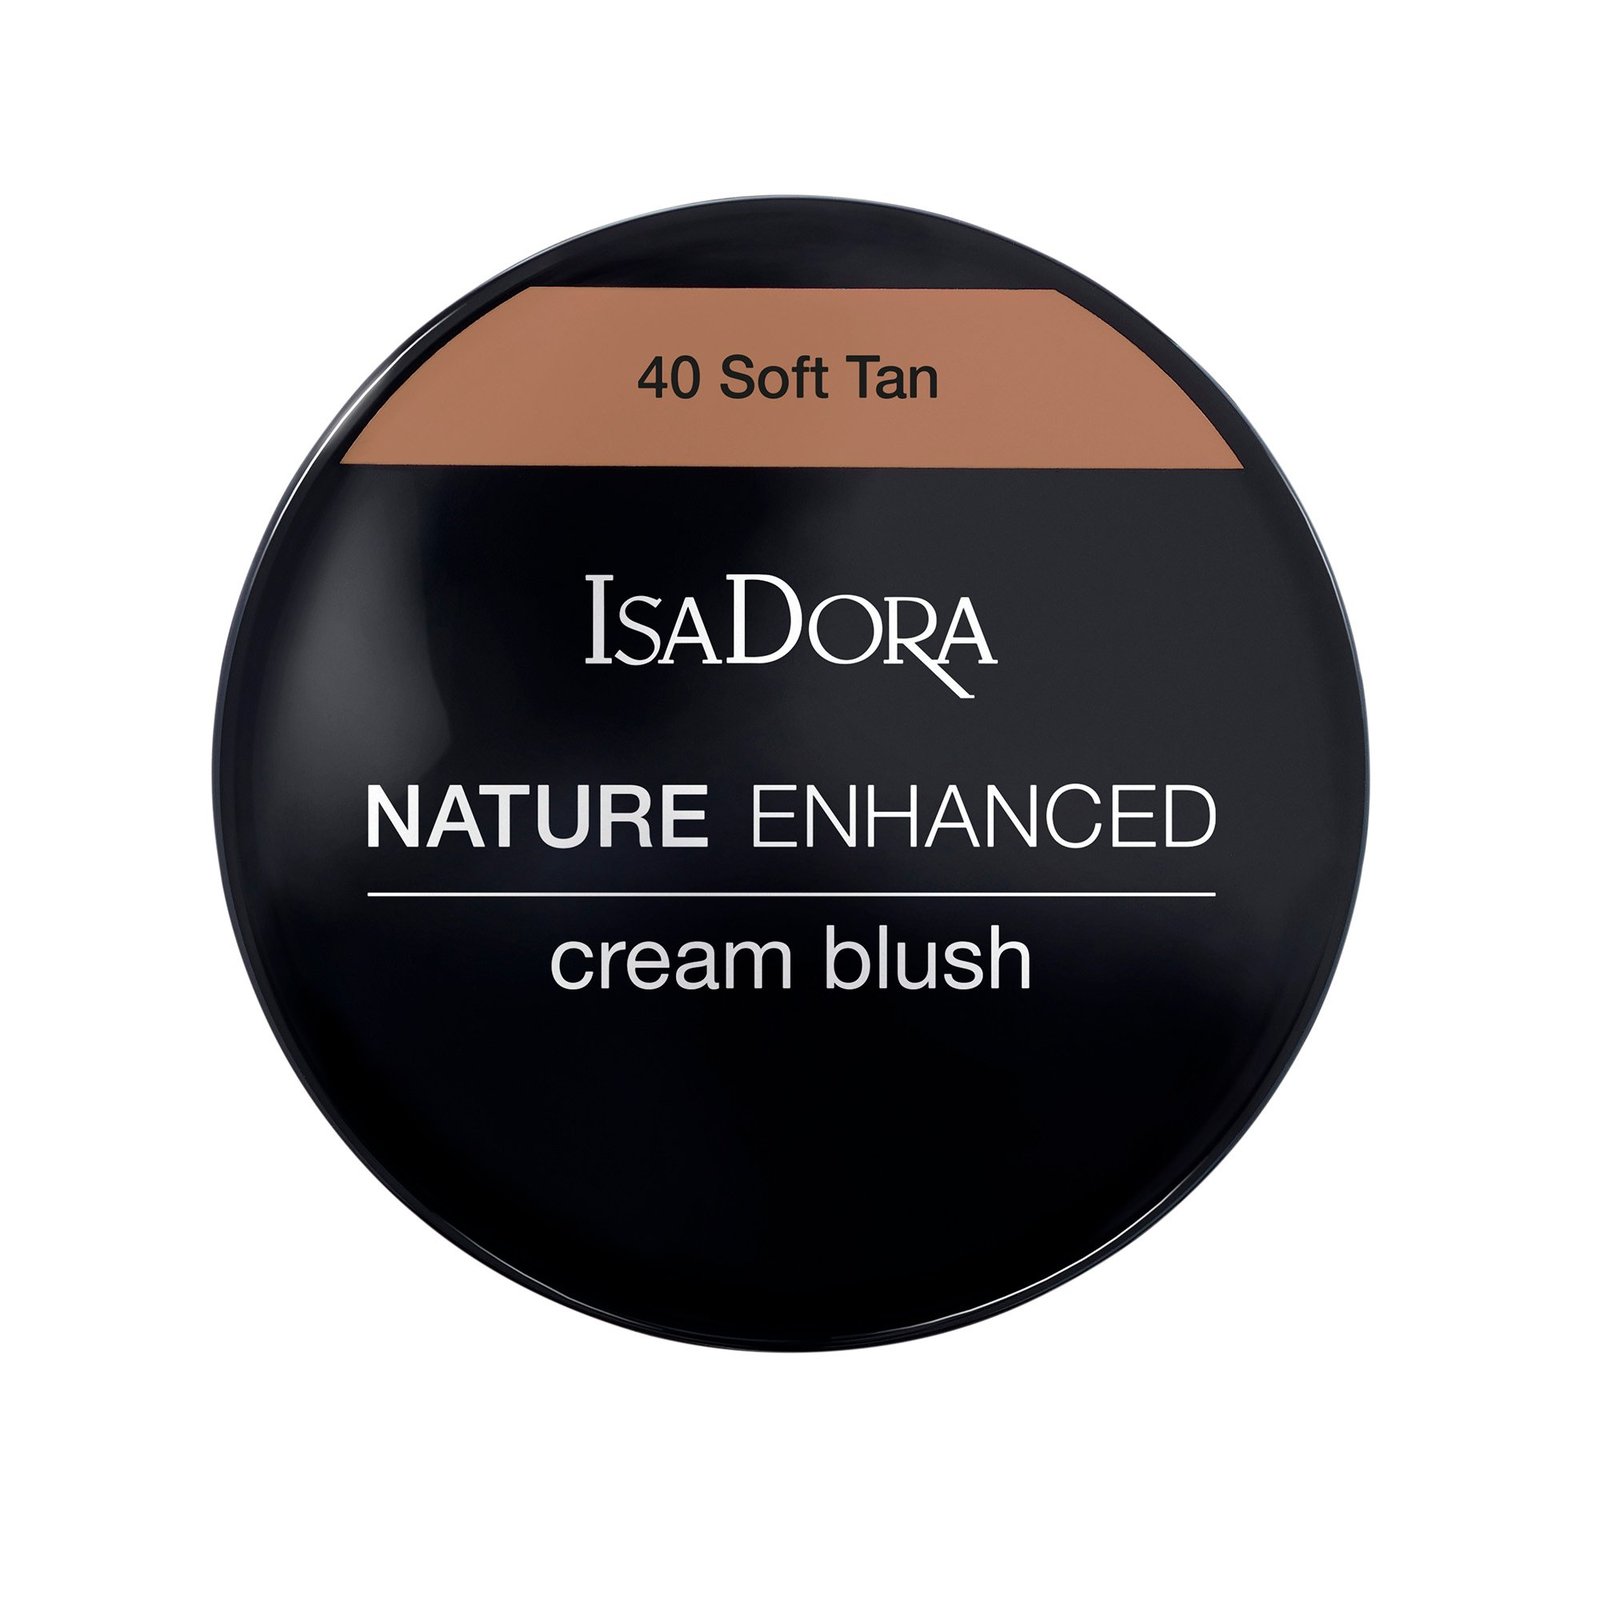 IsaDora Nature Enhanced Cream Blush 40 Soft Tan 3g